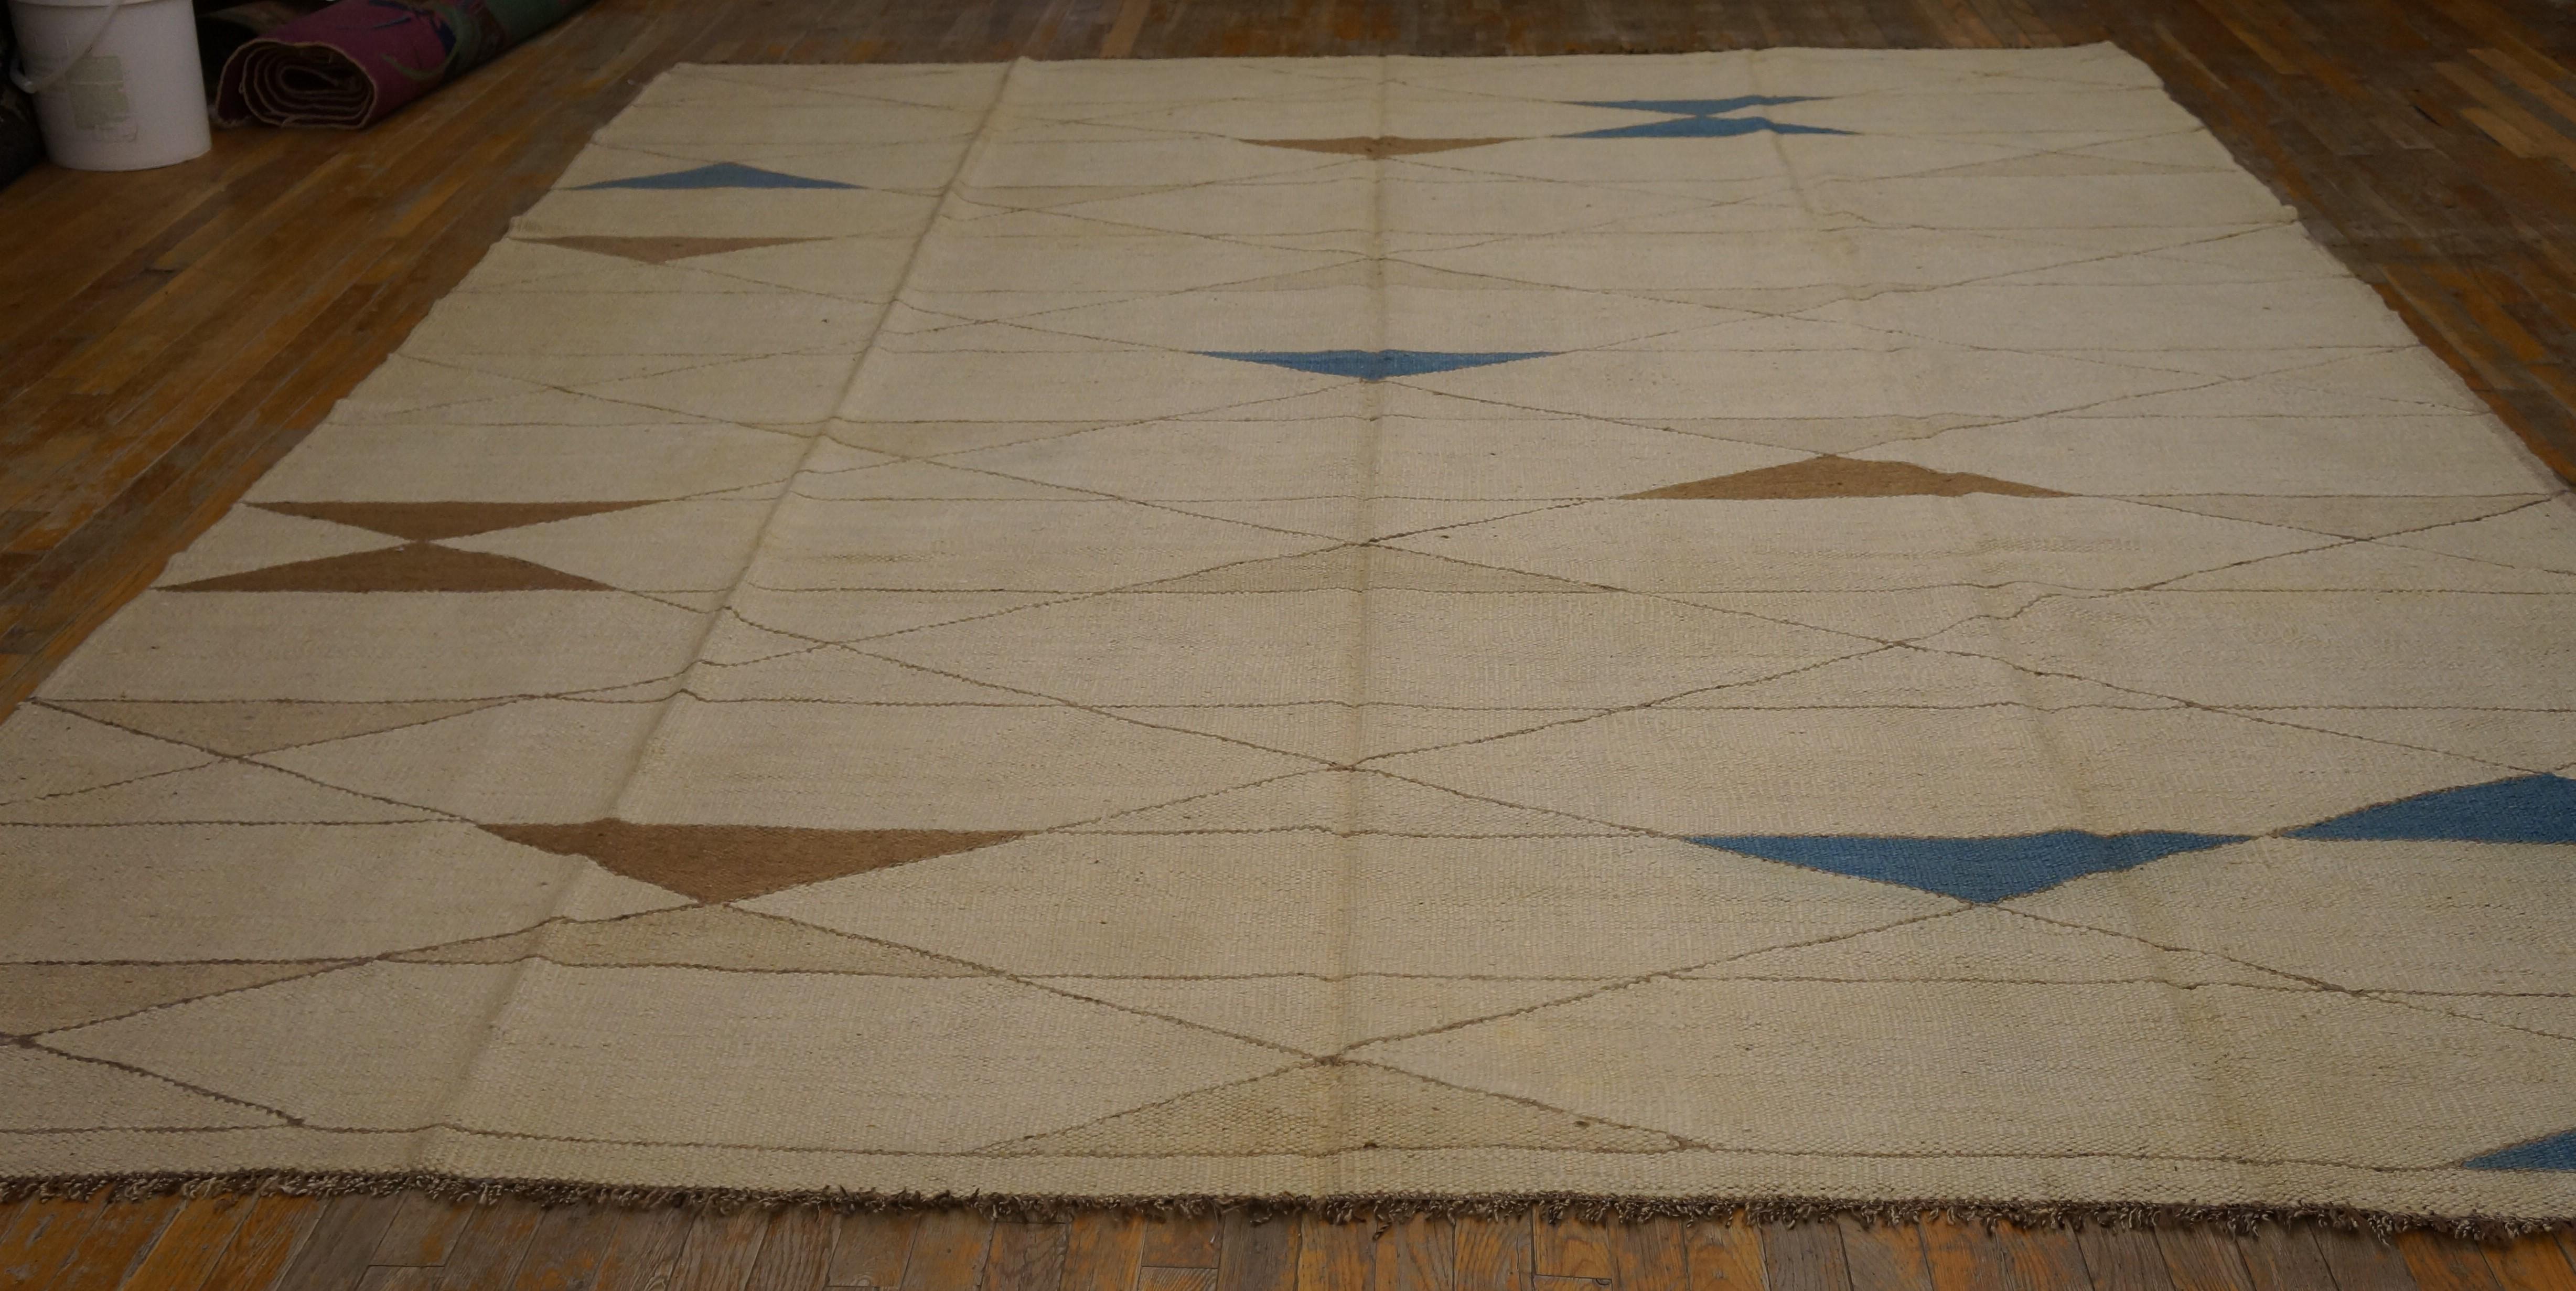 1930s French Art Deco flat-weave carpet (9'6